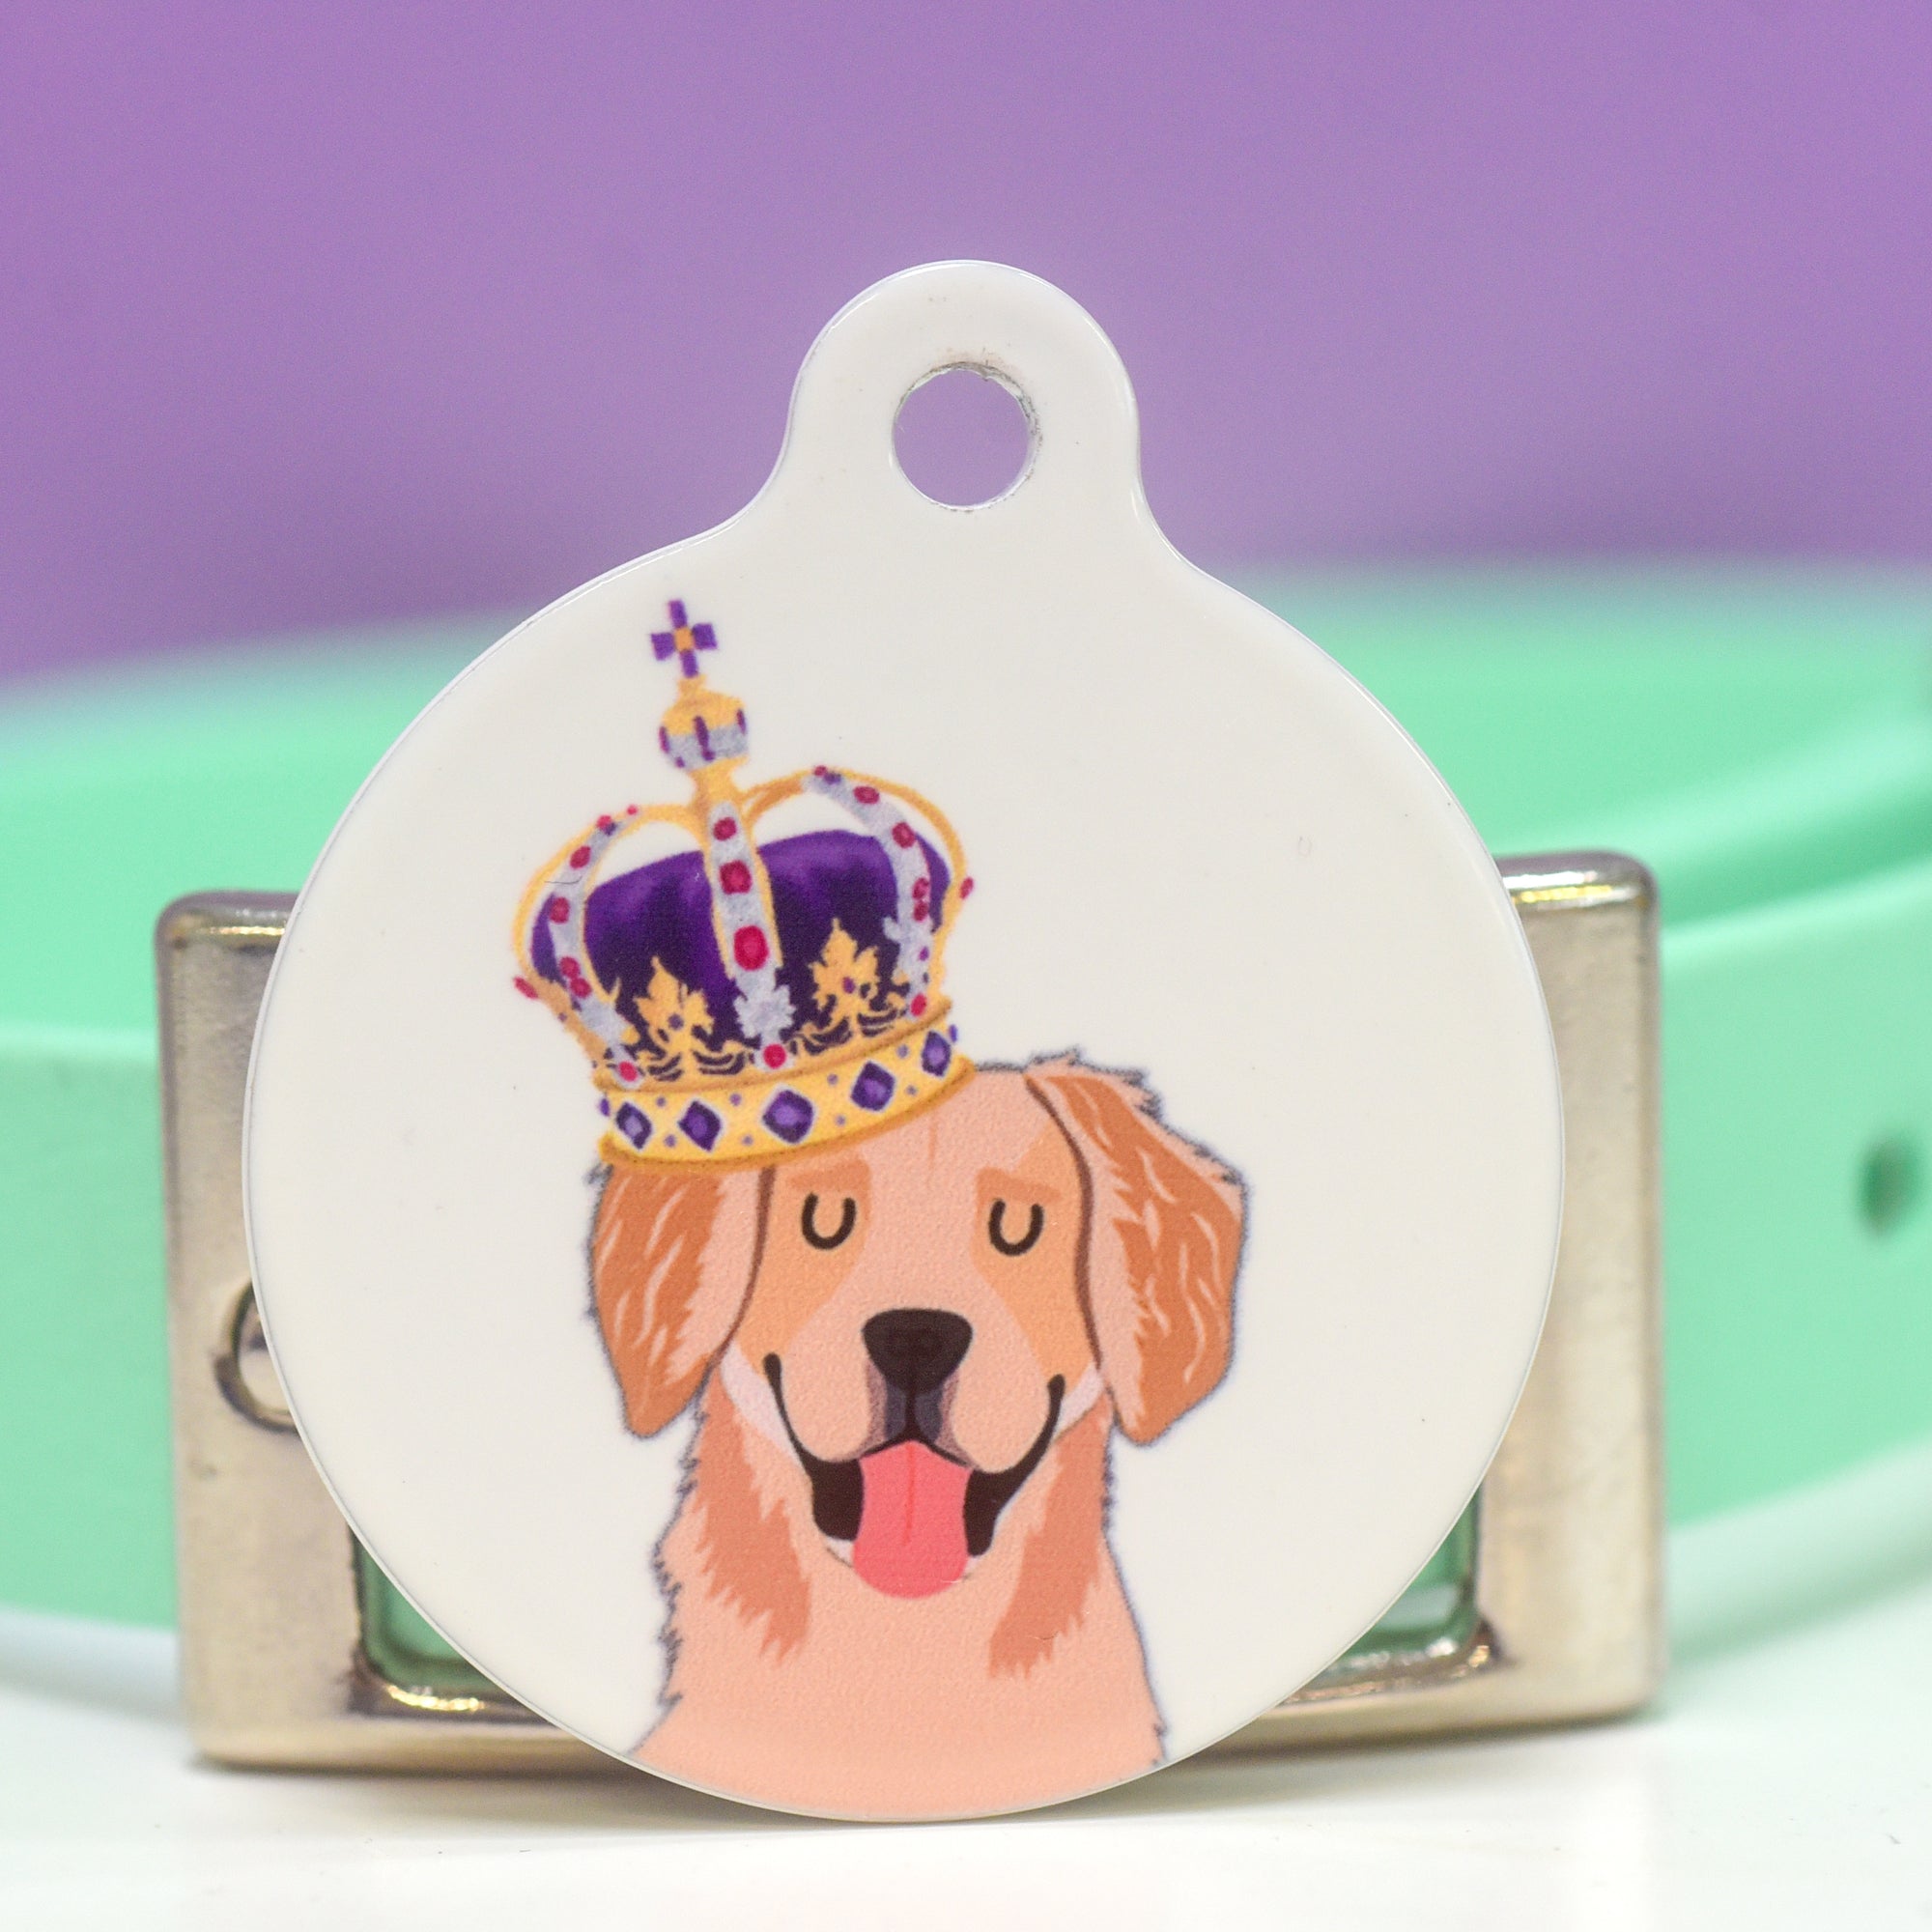 King's Coronation Royal Dog Tag - White CARTOON Dog Illustrations